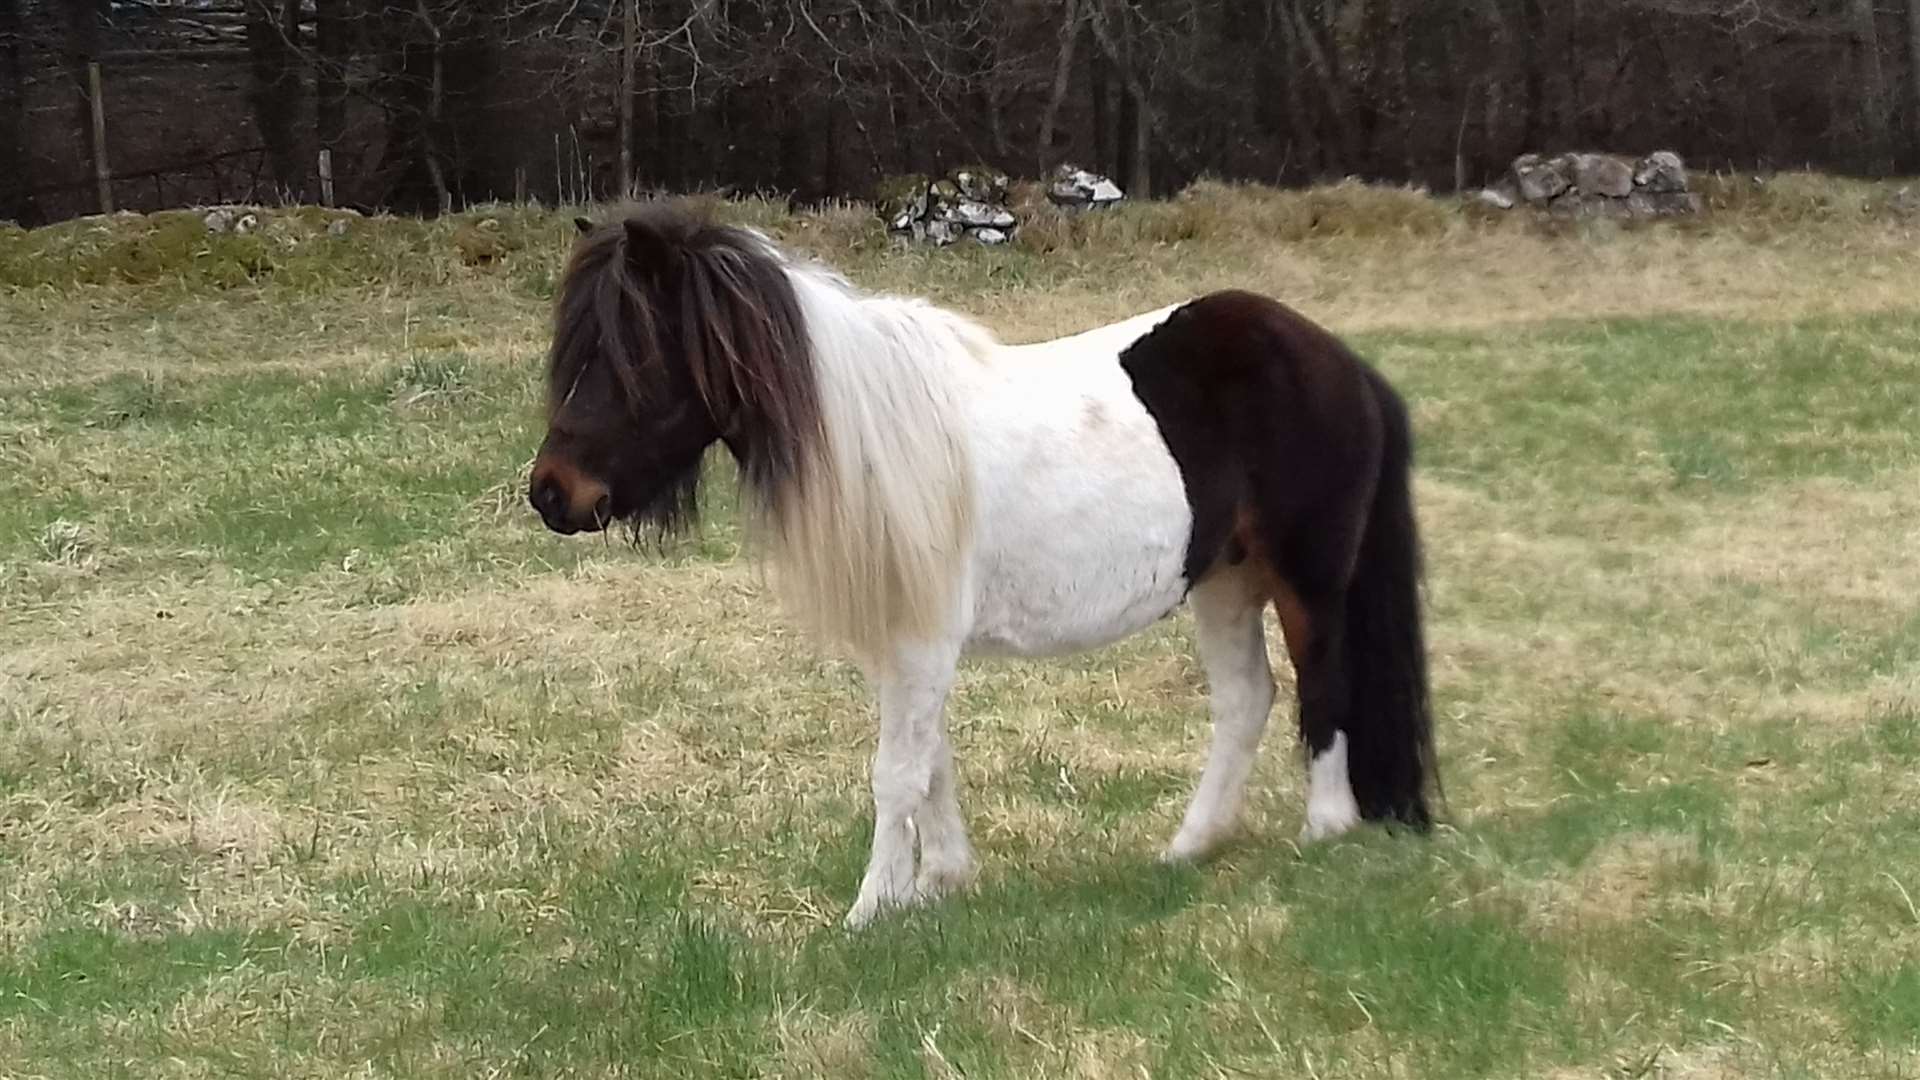 The stray pony. Picture courtesy of Scottish SPCA